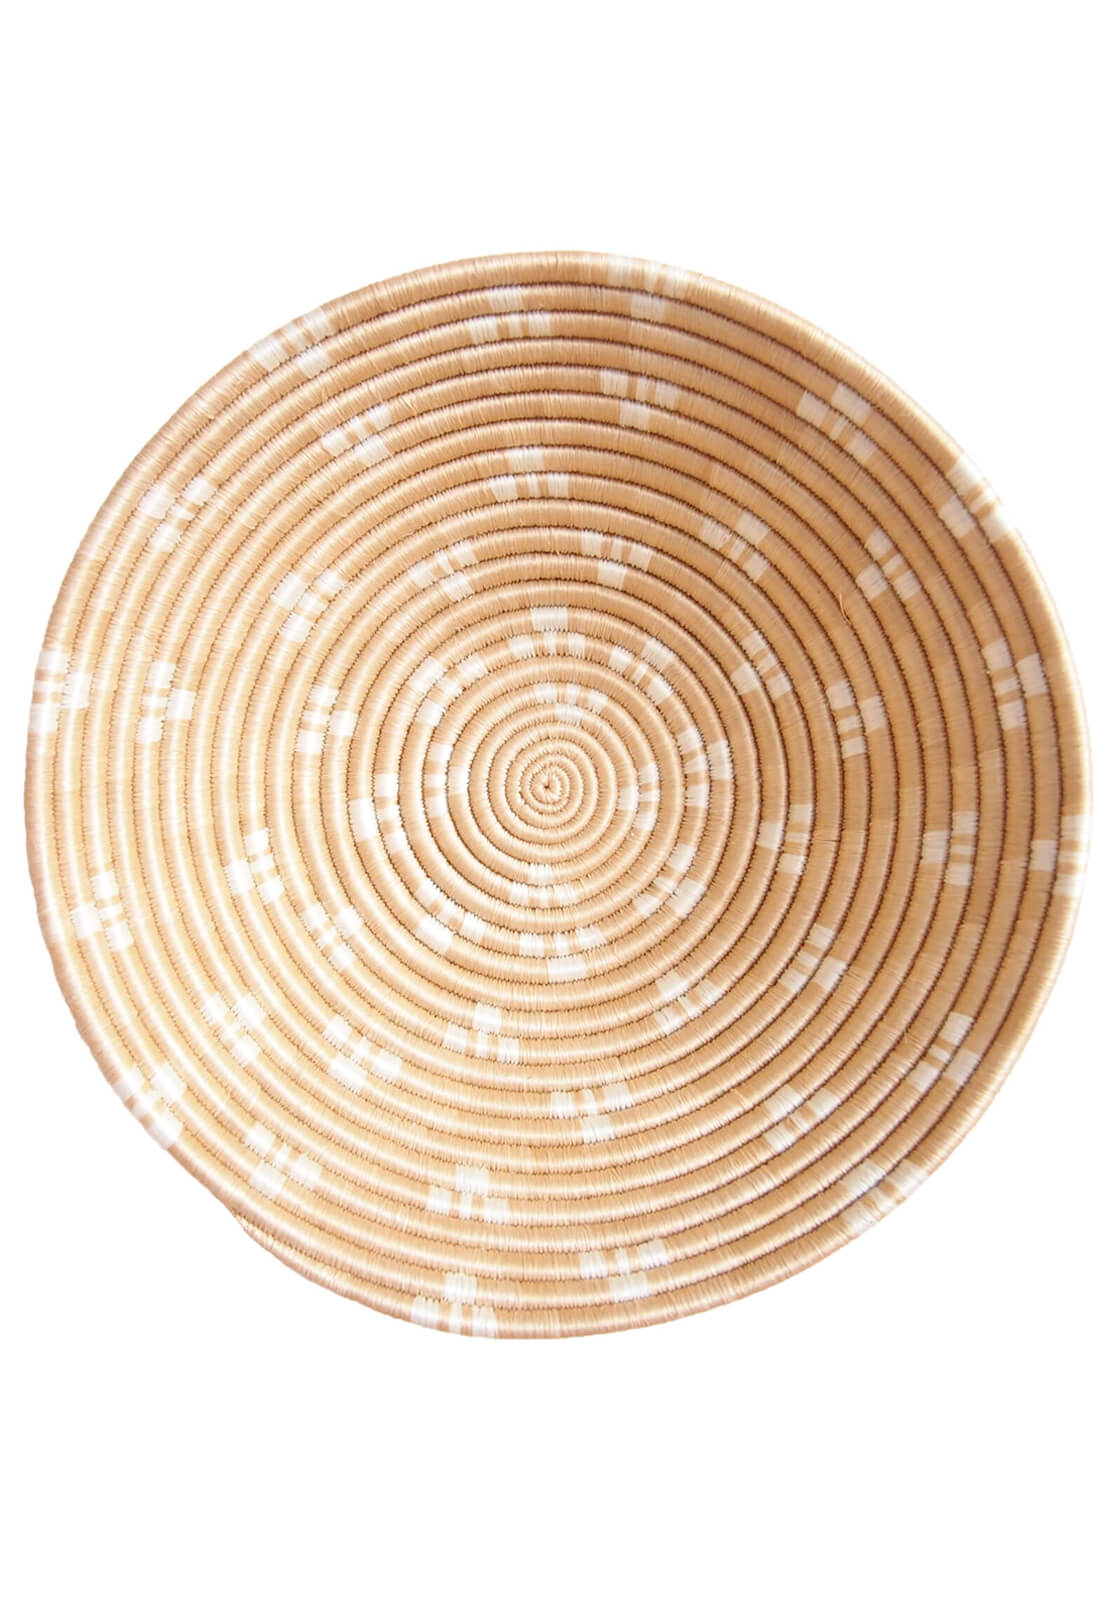 Hand Woven Ntamba Basket - Tan and White